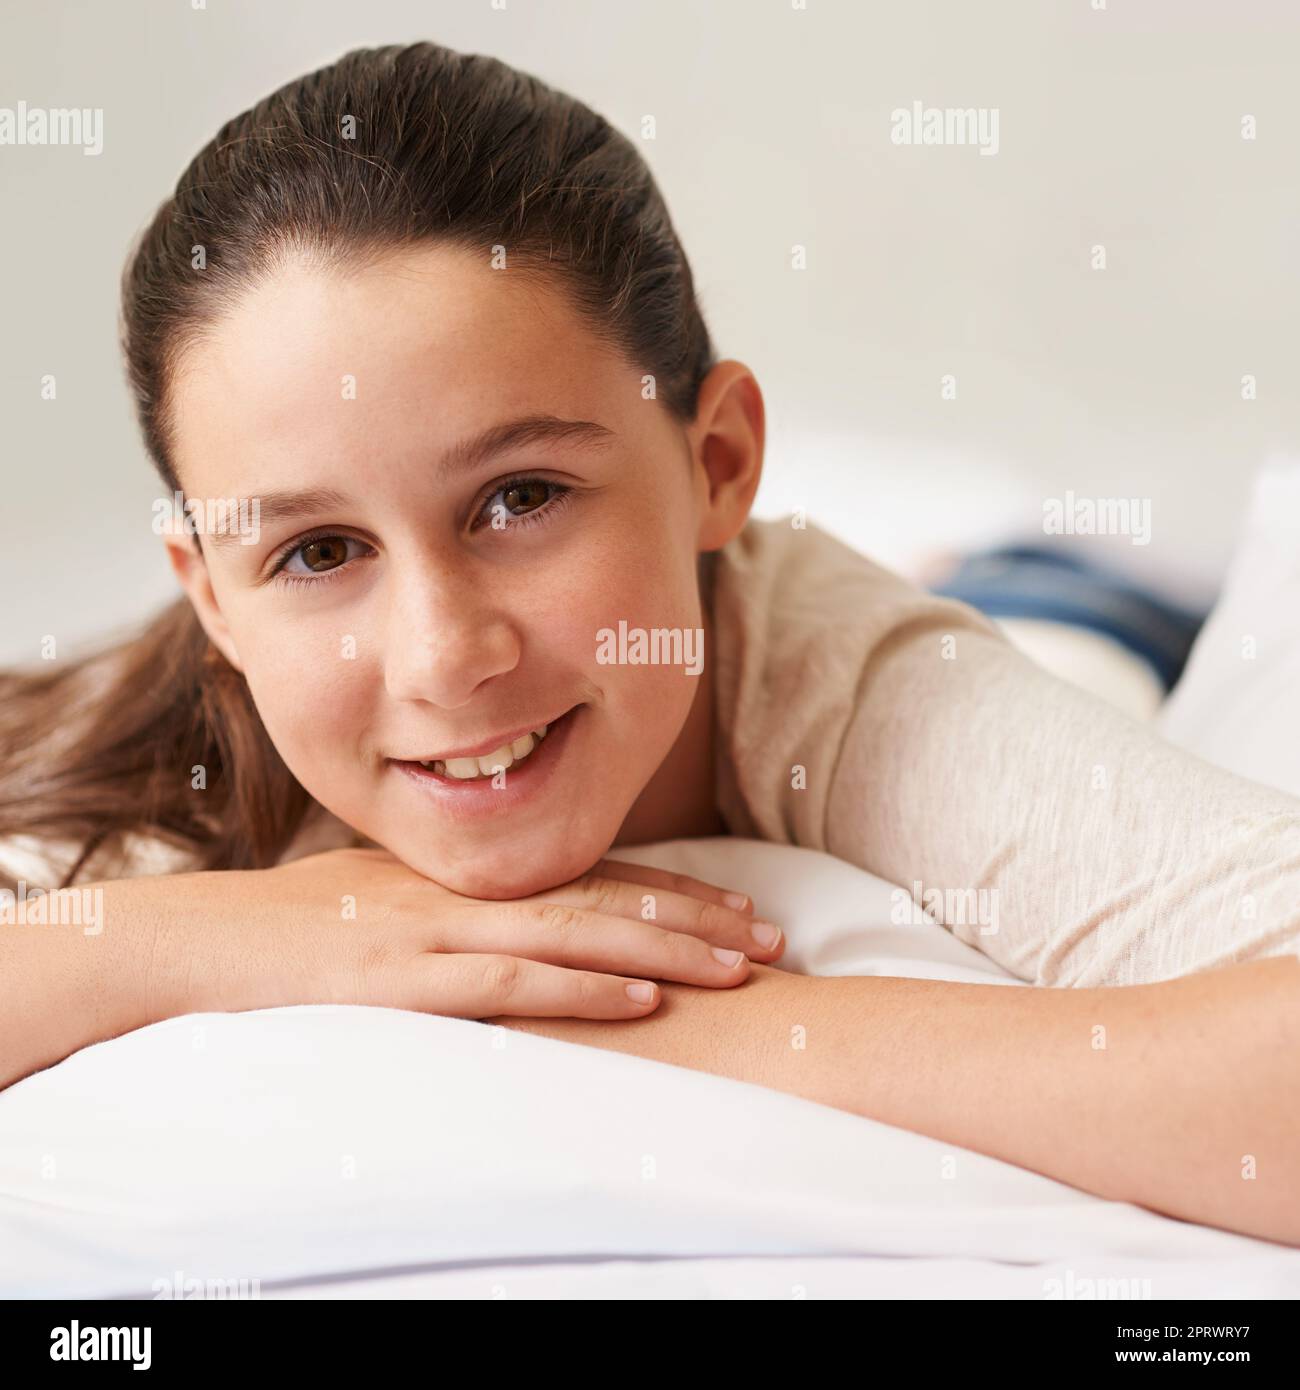 Beautiful teen girl stock image. Image of mixed, cheerful - 27233973